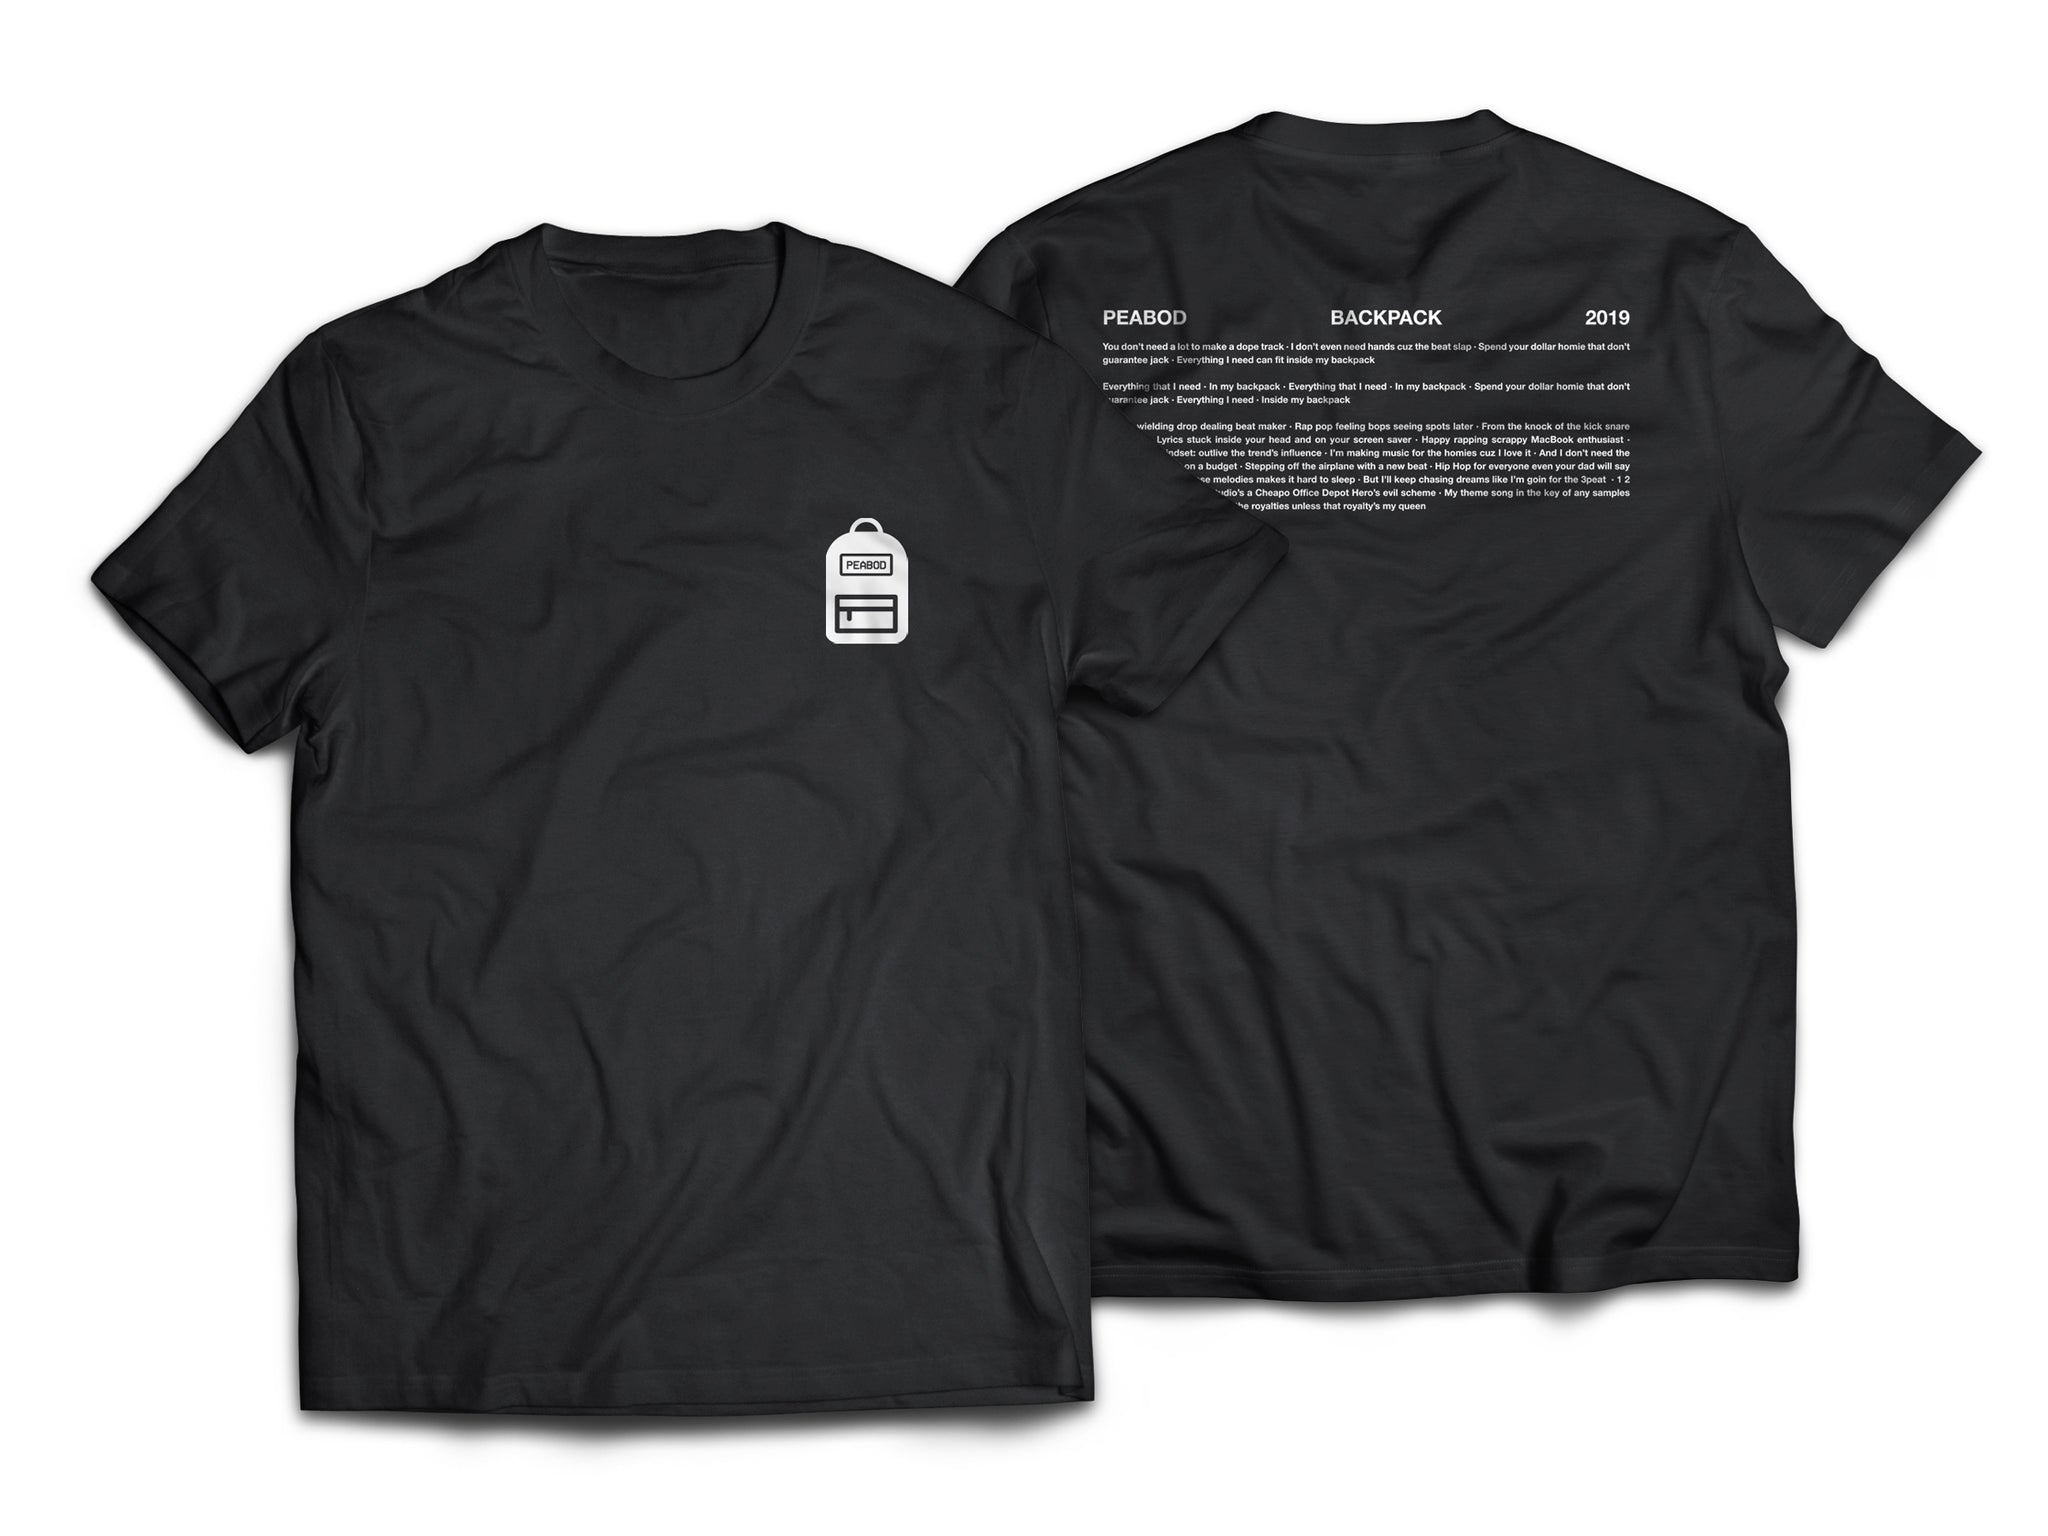 "Backpack" Black T-Shirt